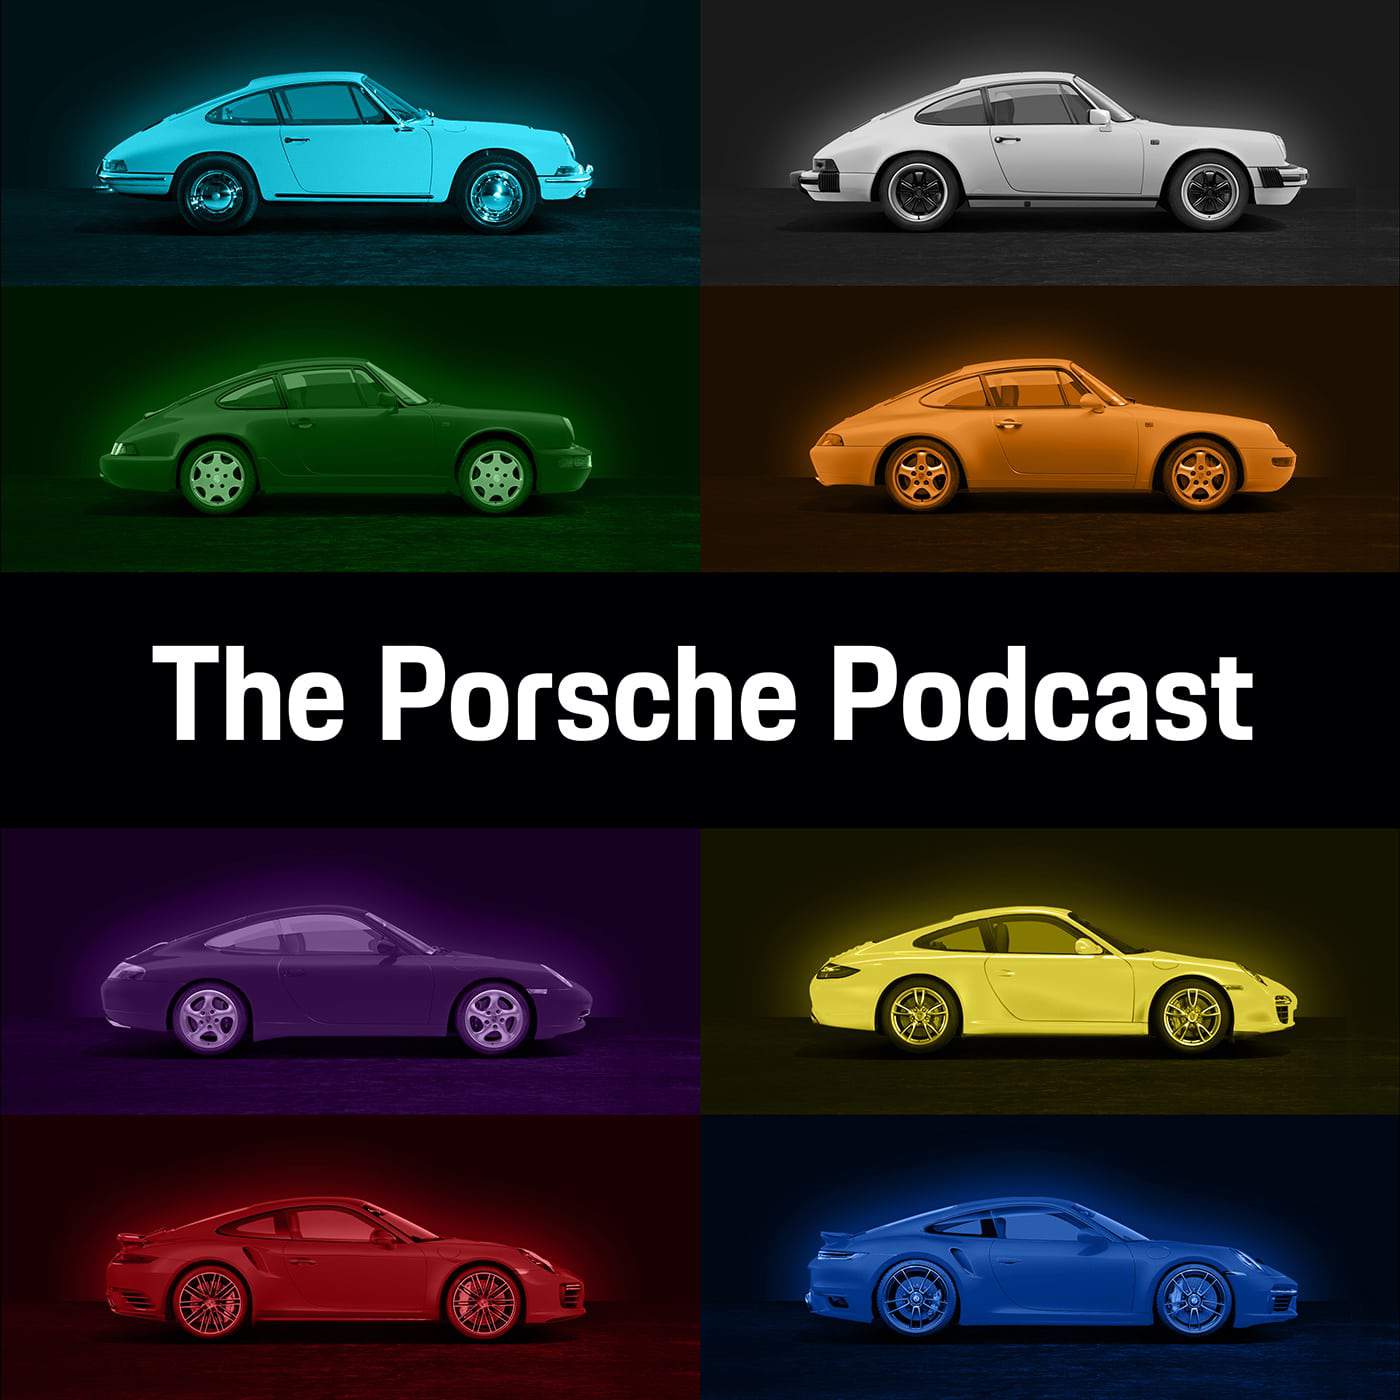 The Porsche Podcast